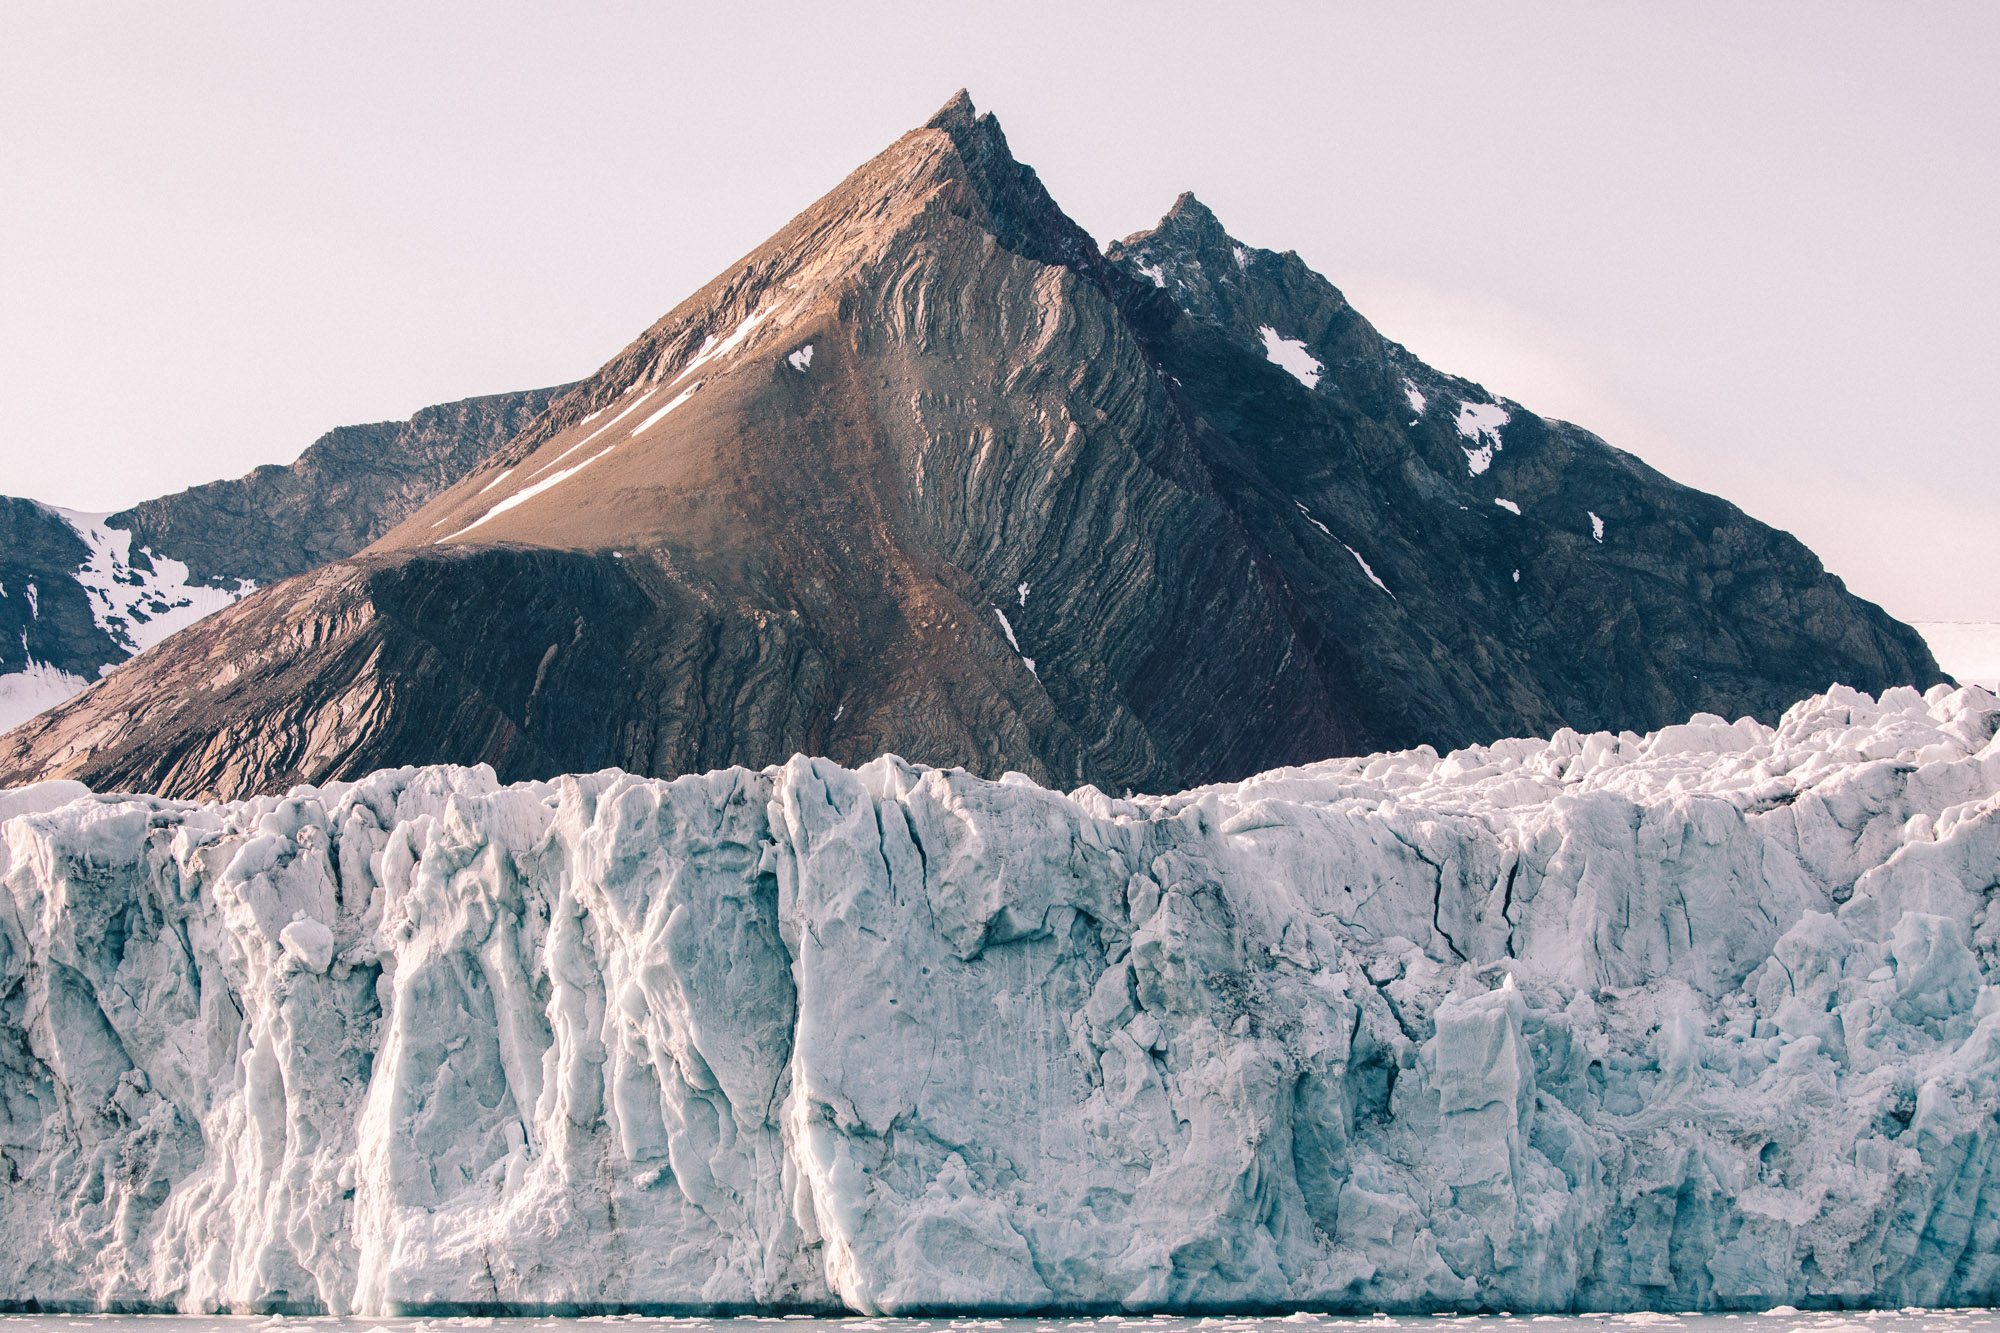 Glacial Landscapes in Svalbard Norway via Find Us Lost